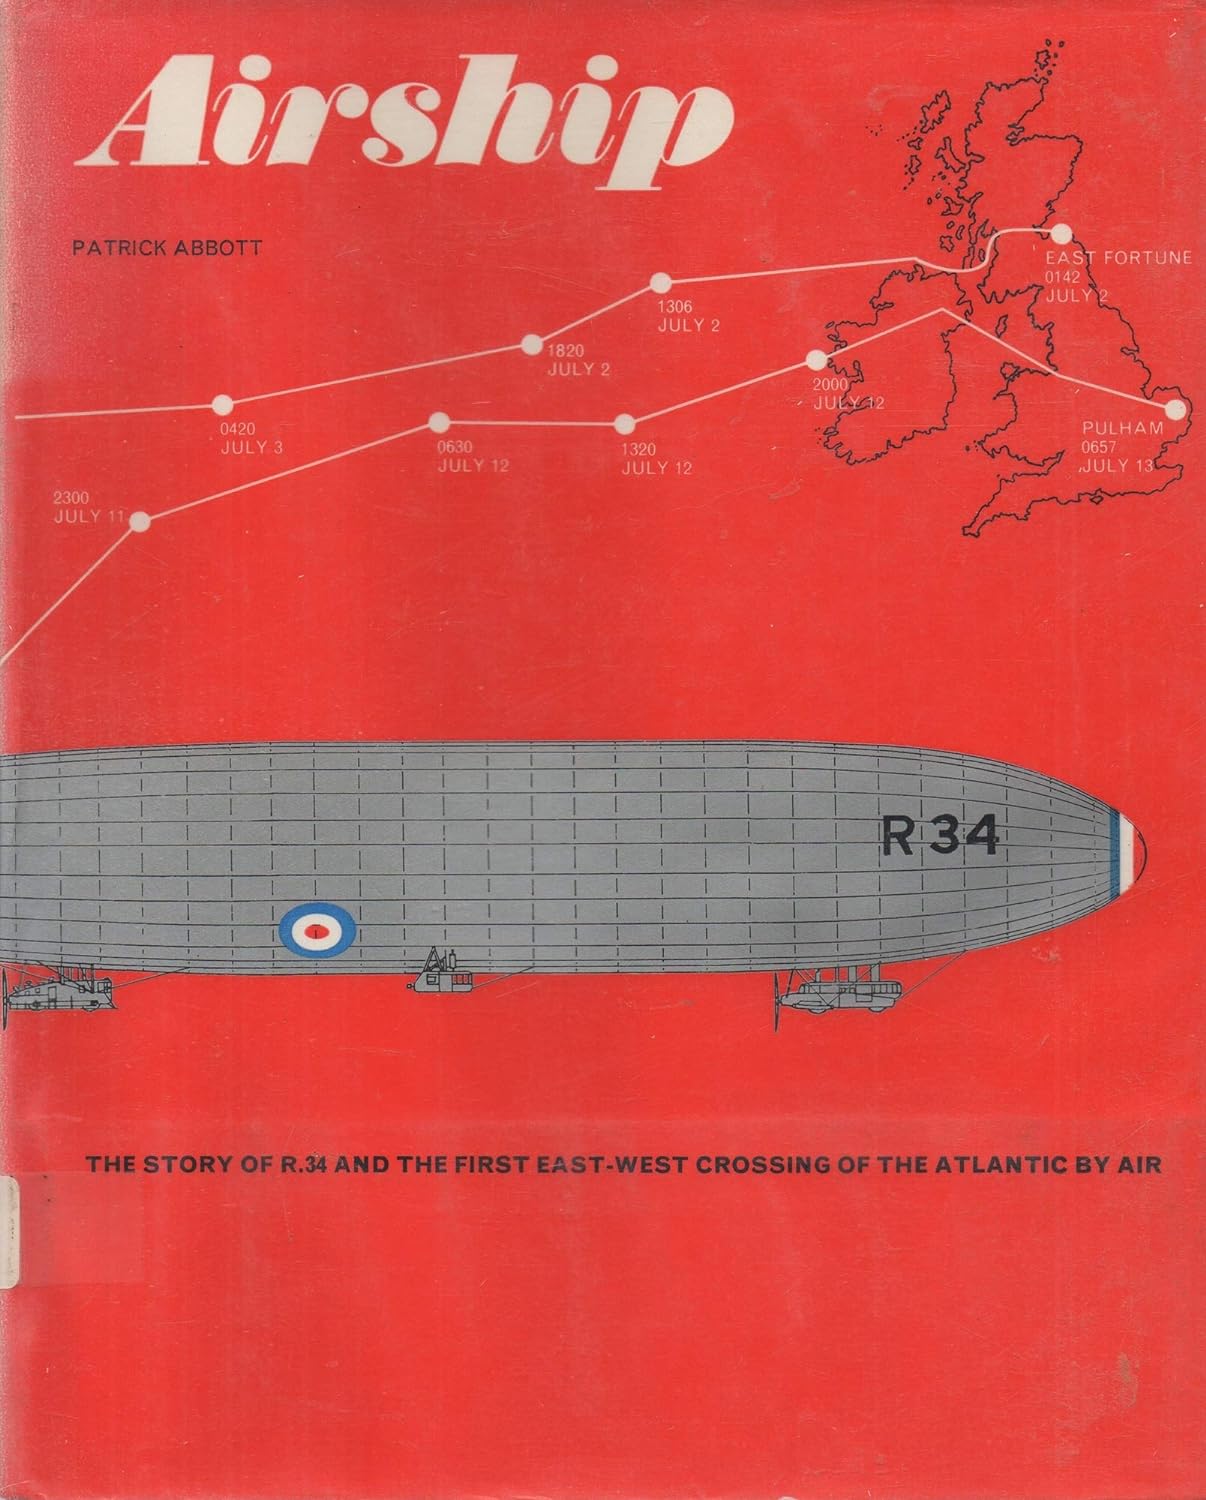 Airship (1973, Adams & Dart [distributed by] Jupiter Books [London)